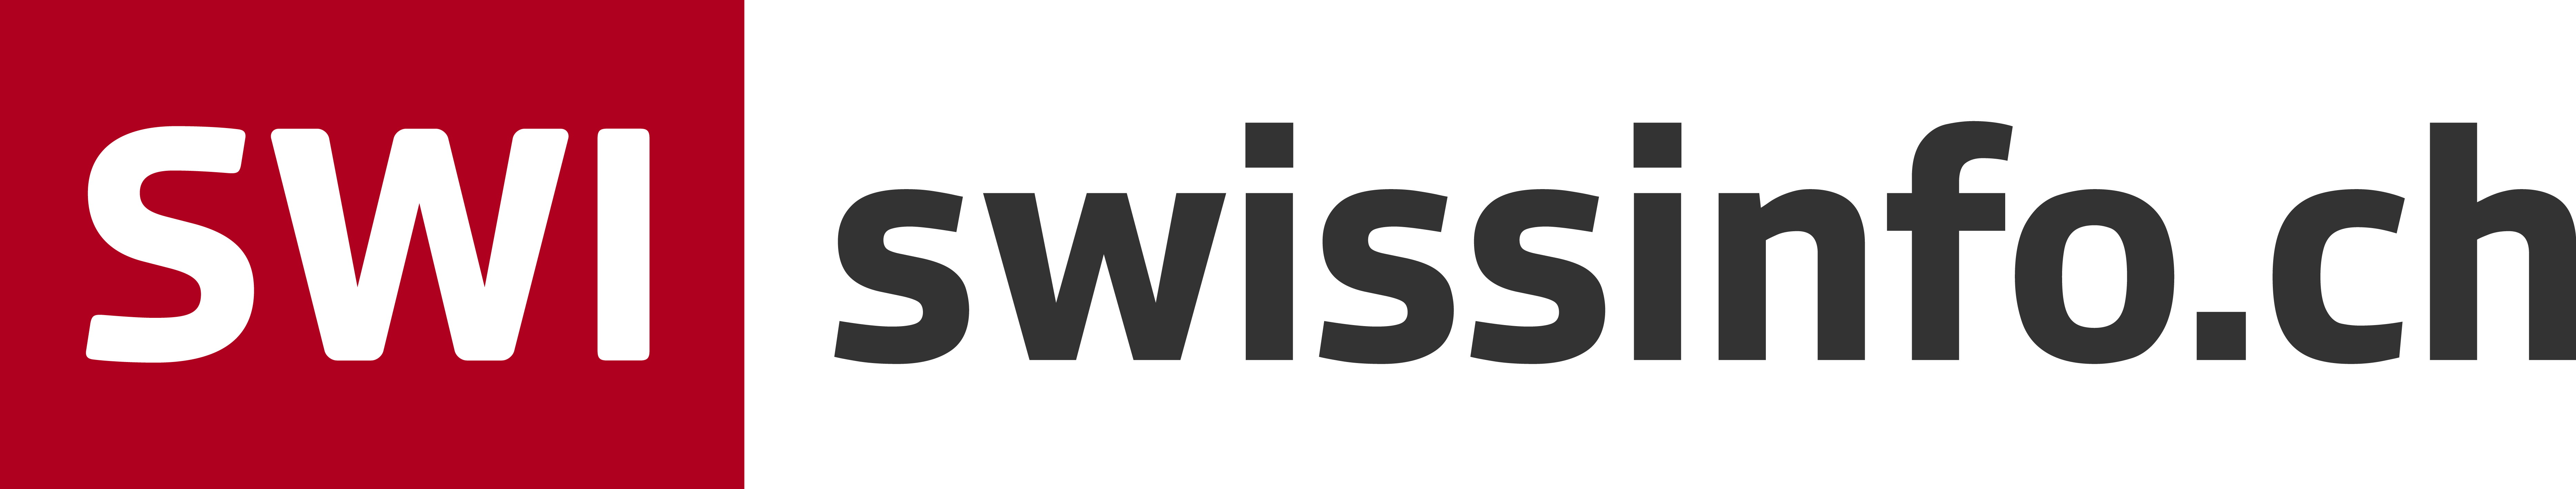 Deutsche-Politik-News.de | SWI swissinfo.ch